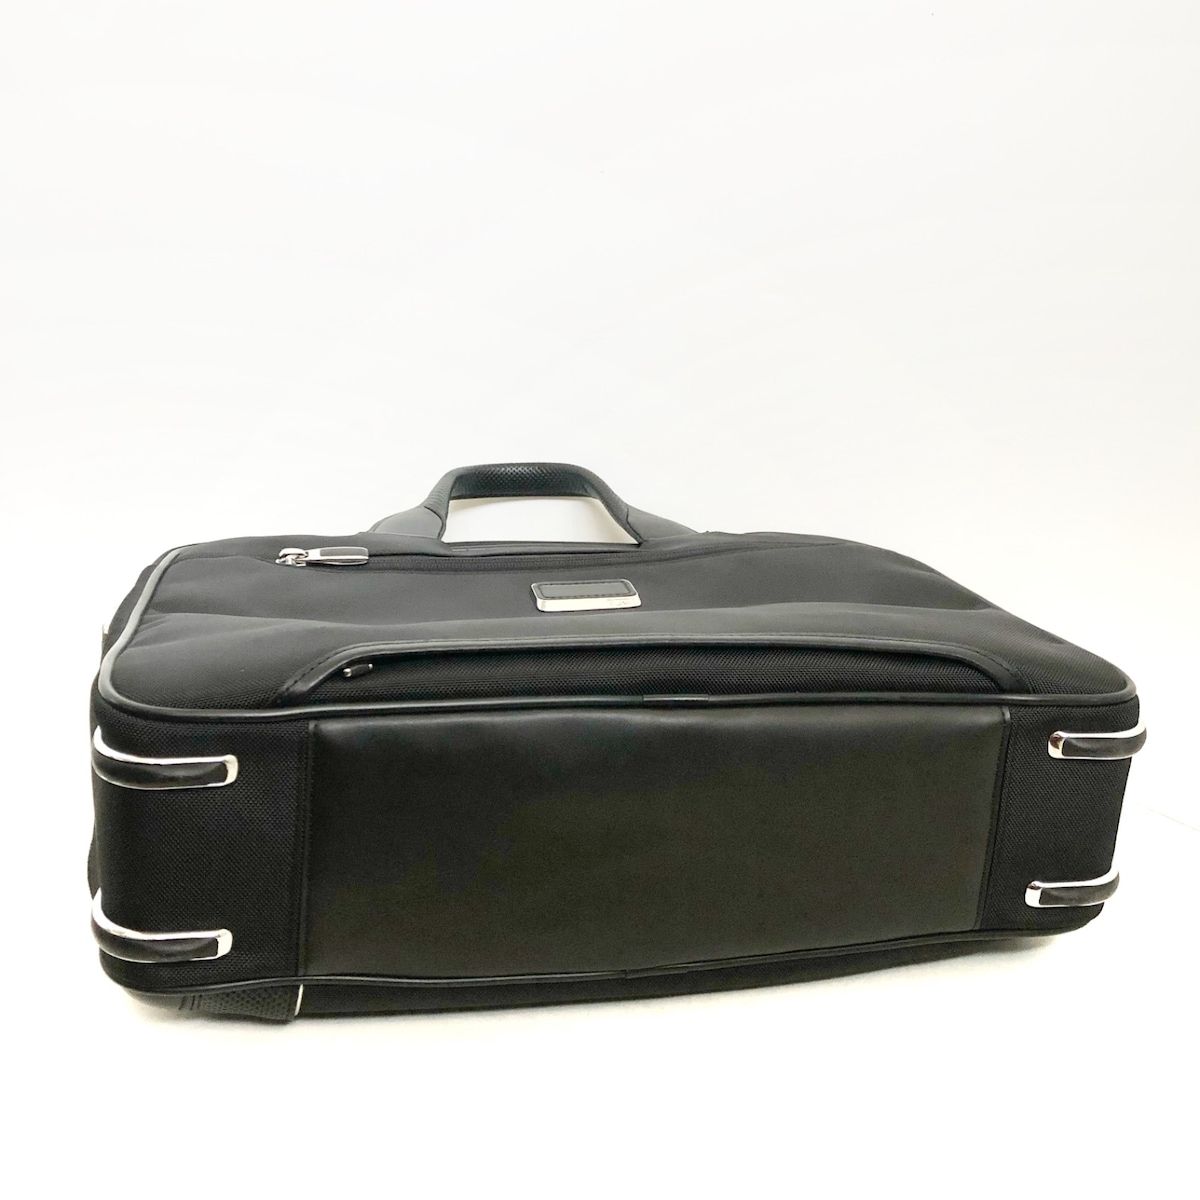 TUMI(トゥミ) ビジネスバッグ美品 - 25503004D3 黒×シルバー ARRIVE/本体ロックなし TUMIナイロン×レザー×金属素材